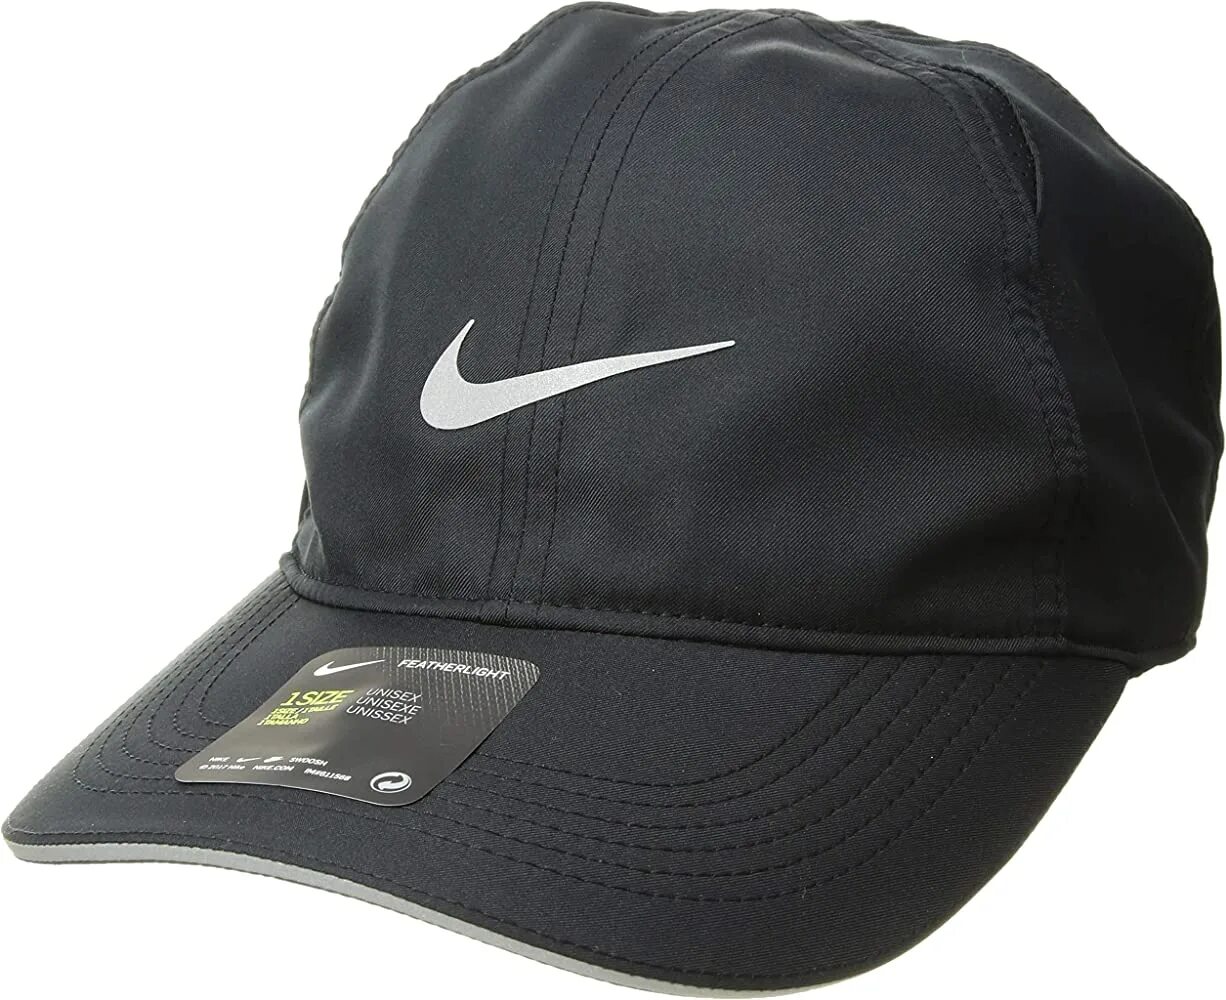 Купить бейсболку найк. Nike Reflective AEROBILL cap. Nike Dri Fit cap 2010. Бейсболка Nike Featherlight. Кепка Nike Featherlight.